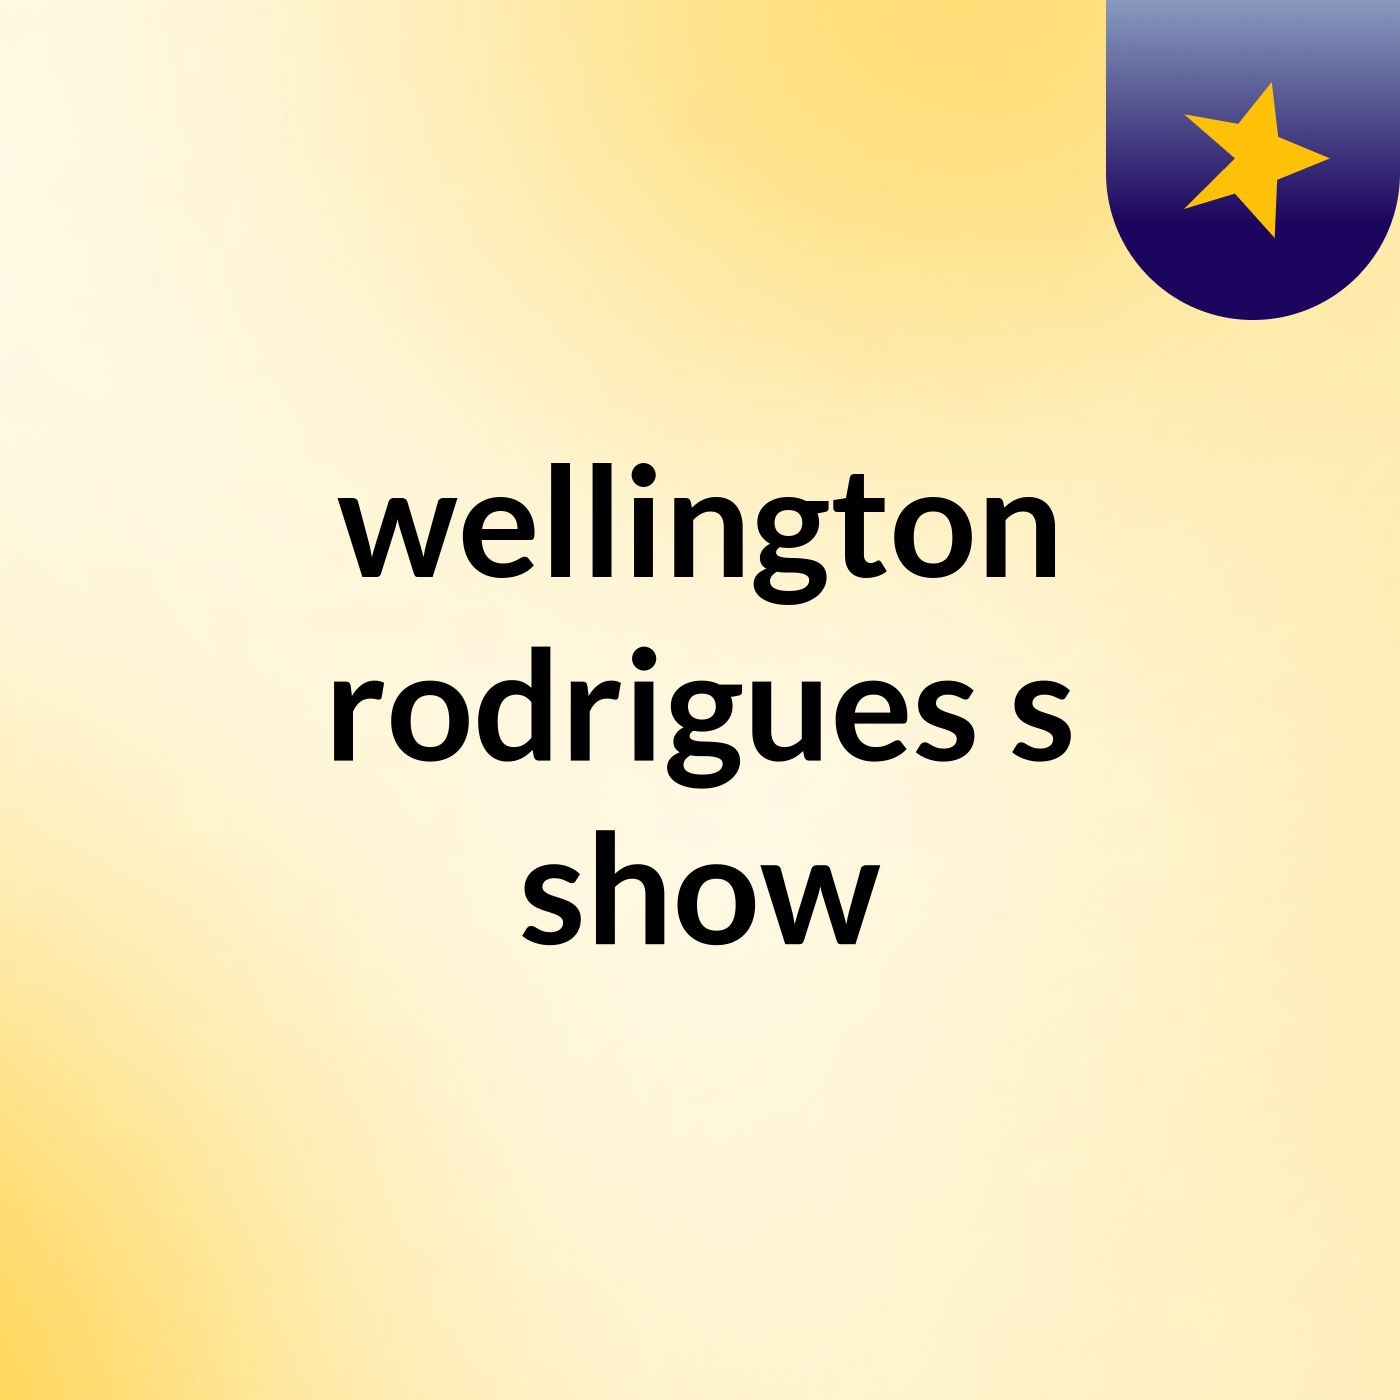 wellington rodrigues's show